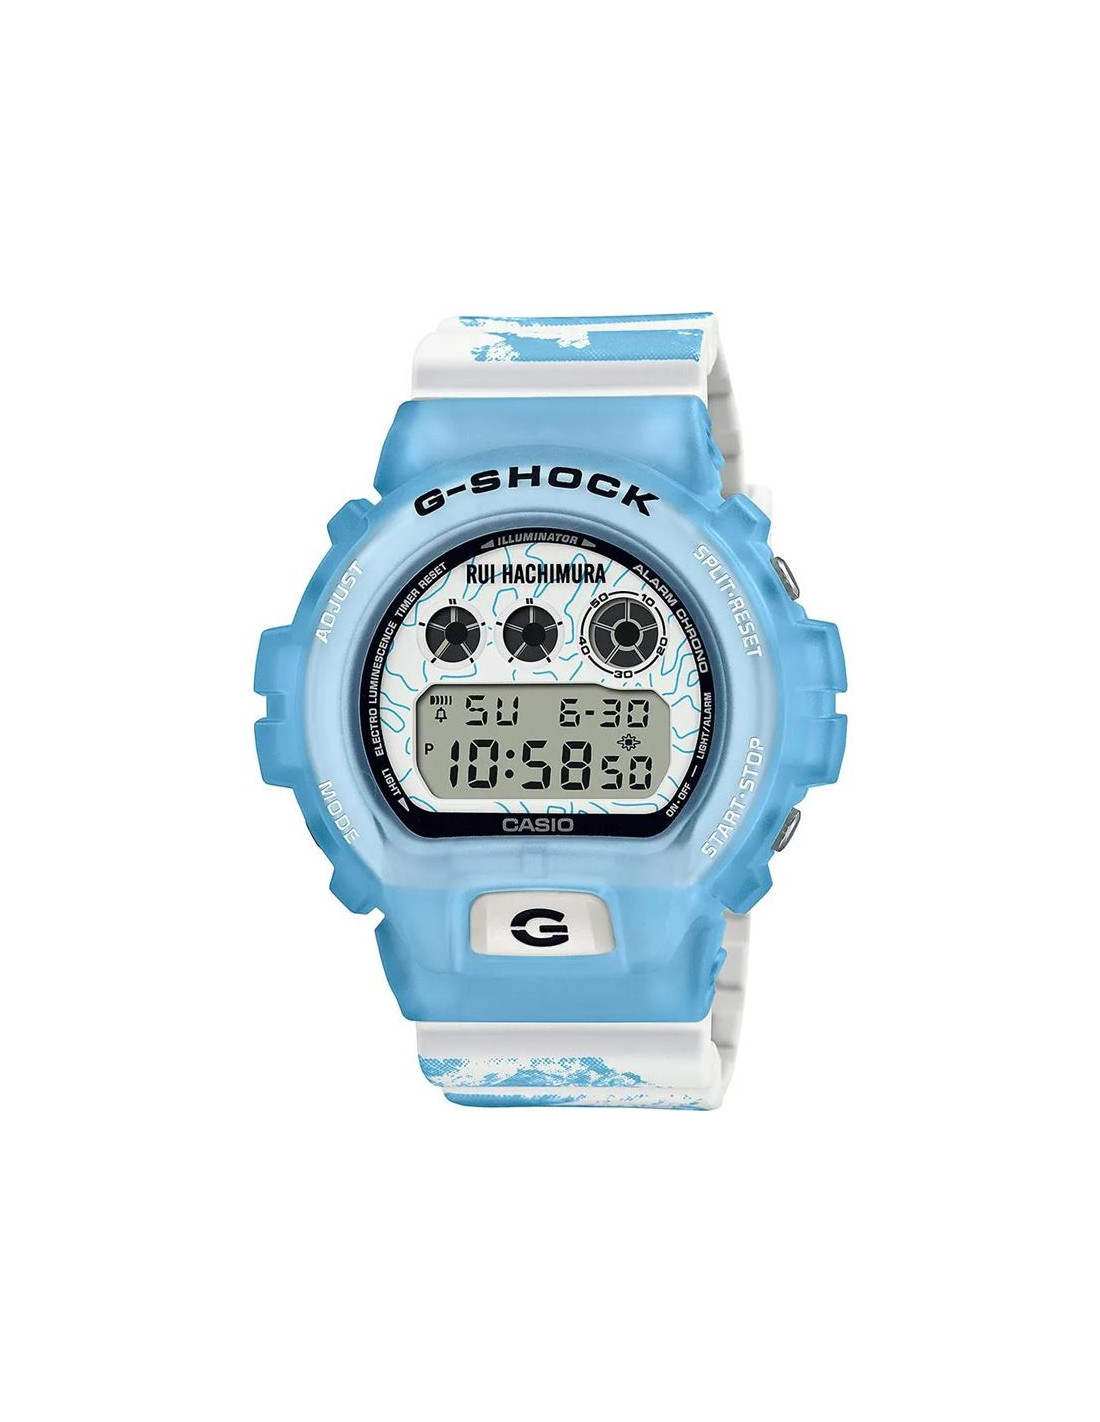 Reloj casio g-shock digital 6900 rui hachimura azul product